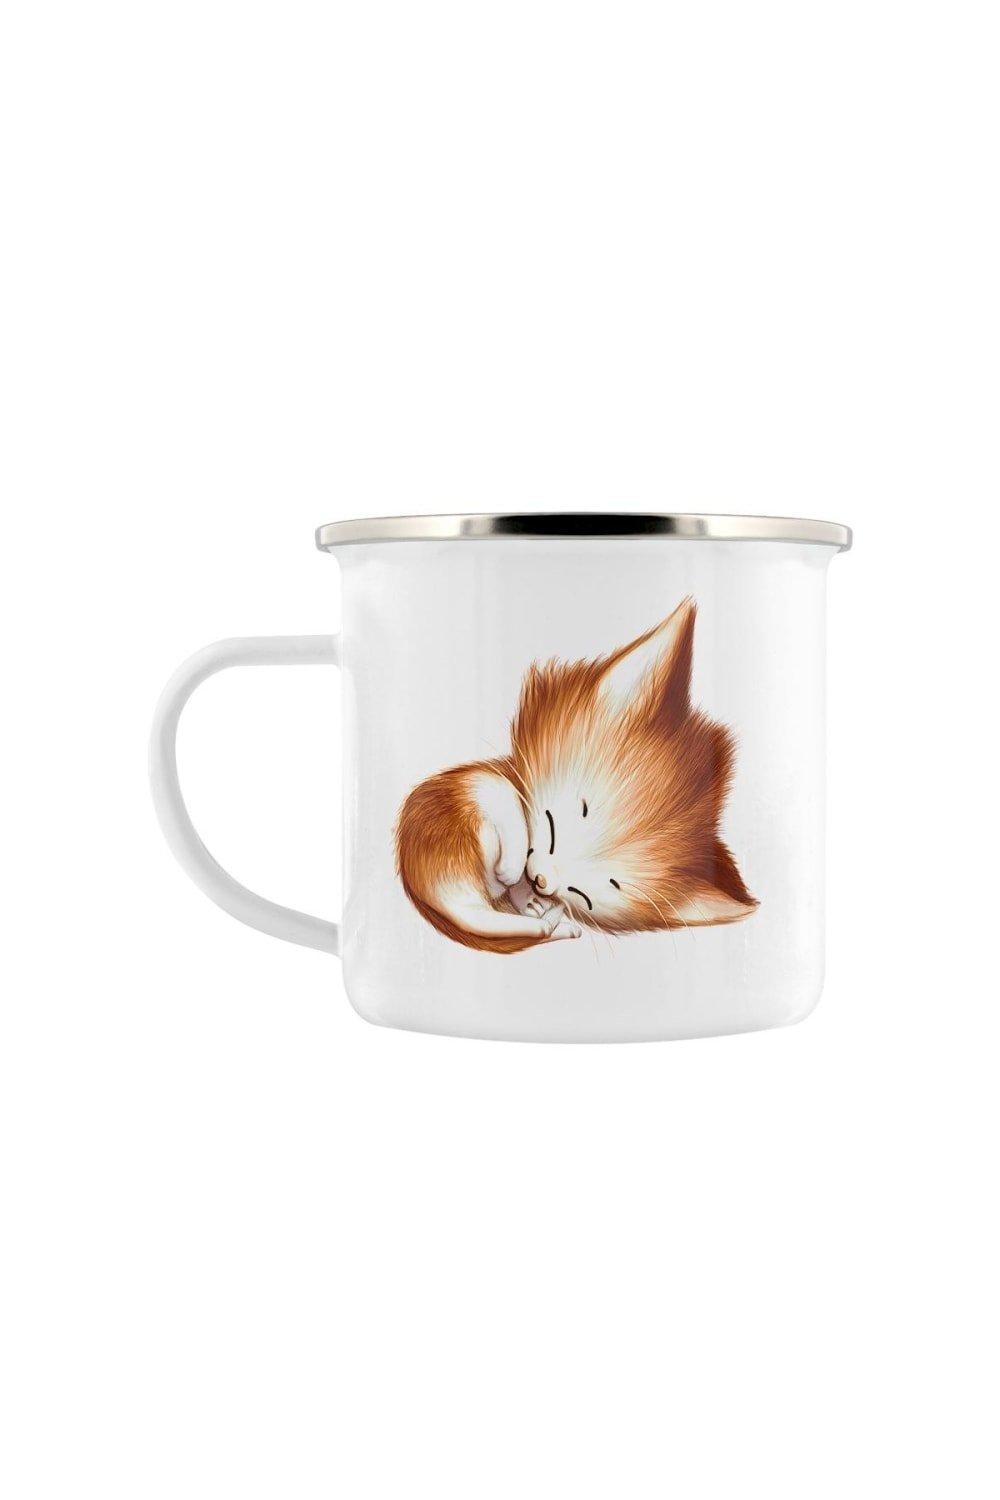 Photos - Mug / Cup Kitsch Kittens Enamel Mug